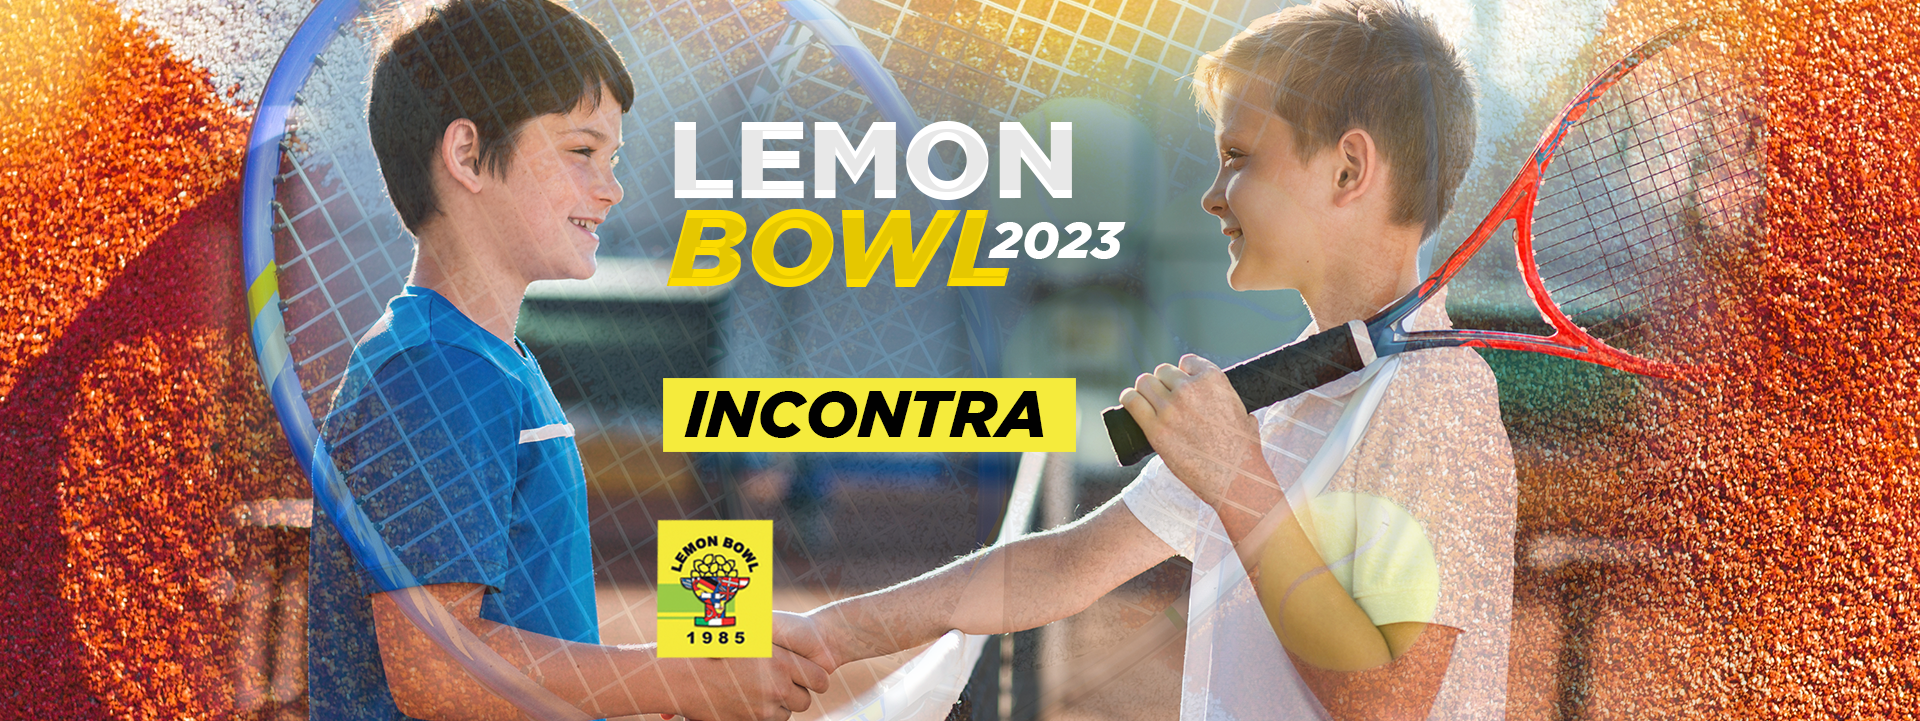 Lemon Bowl Incontra